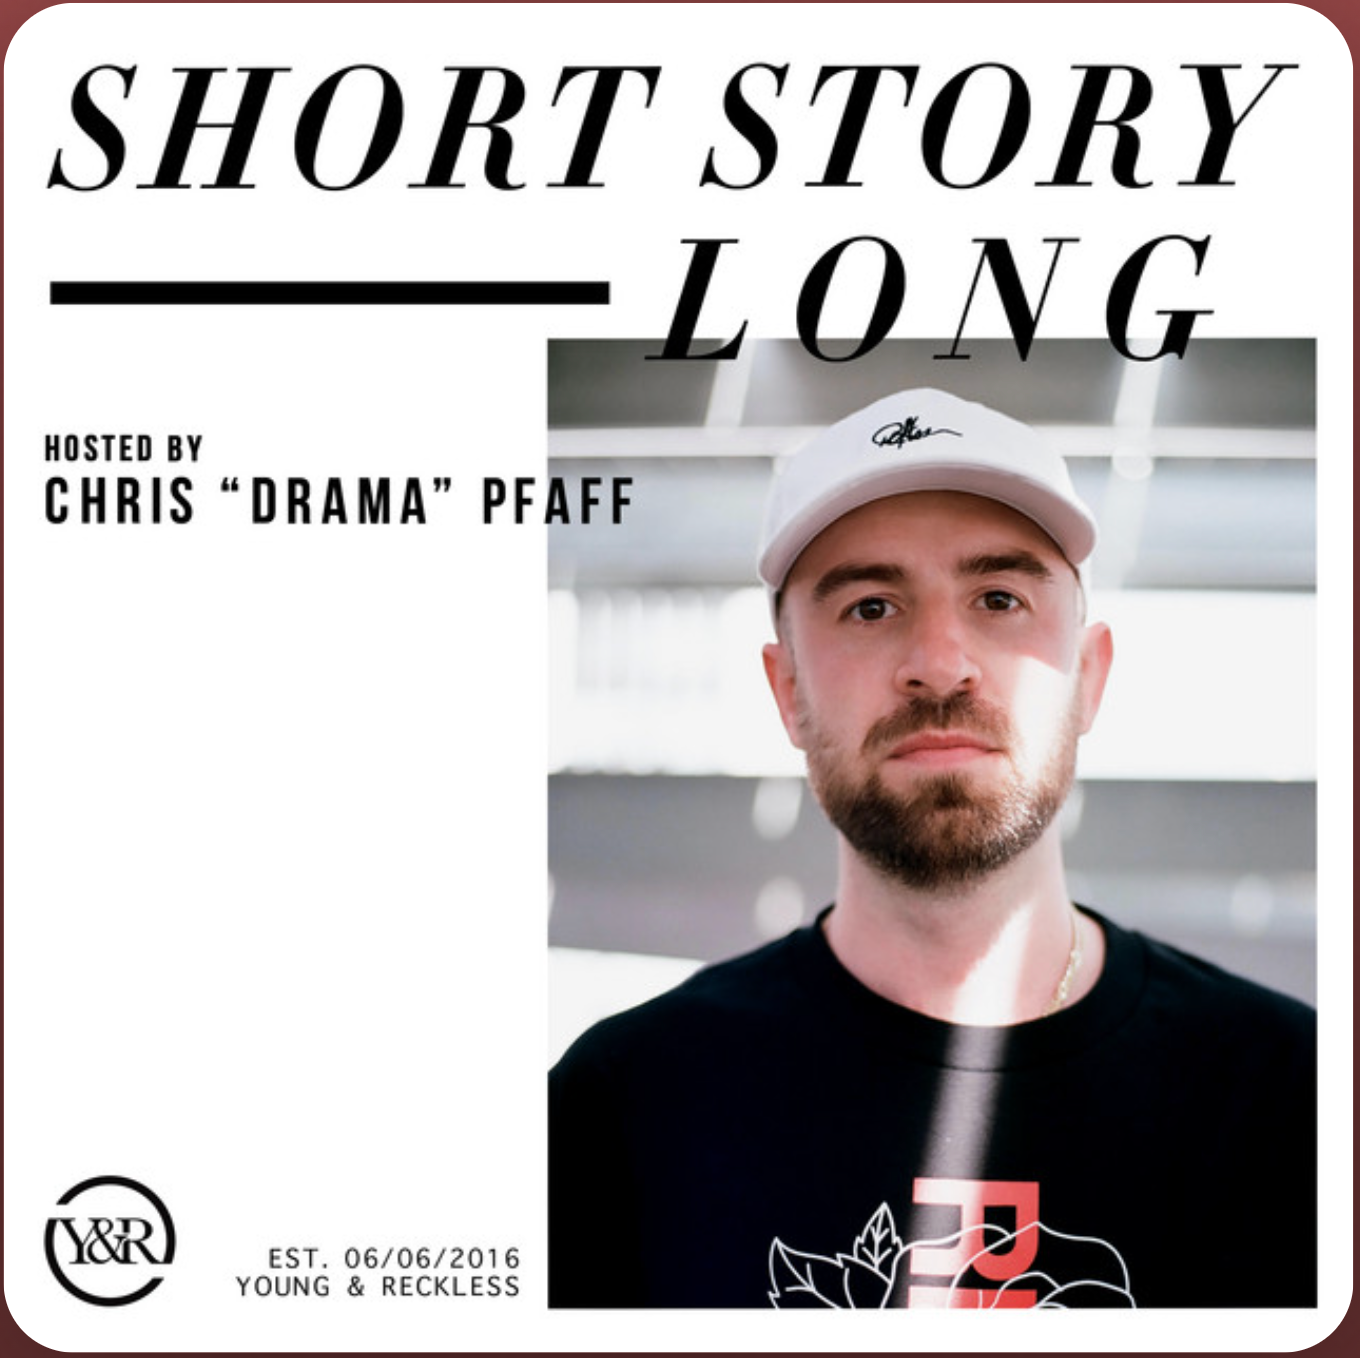 Short Story Long with Chris "Drama" Pfaff - Joe Huff and Rob Nand